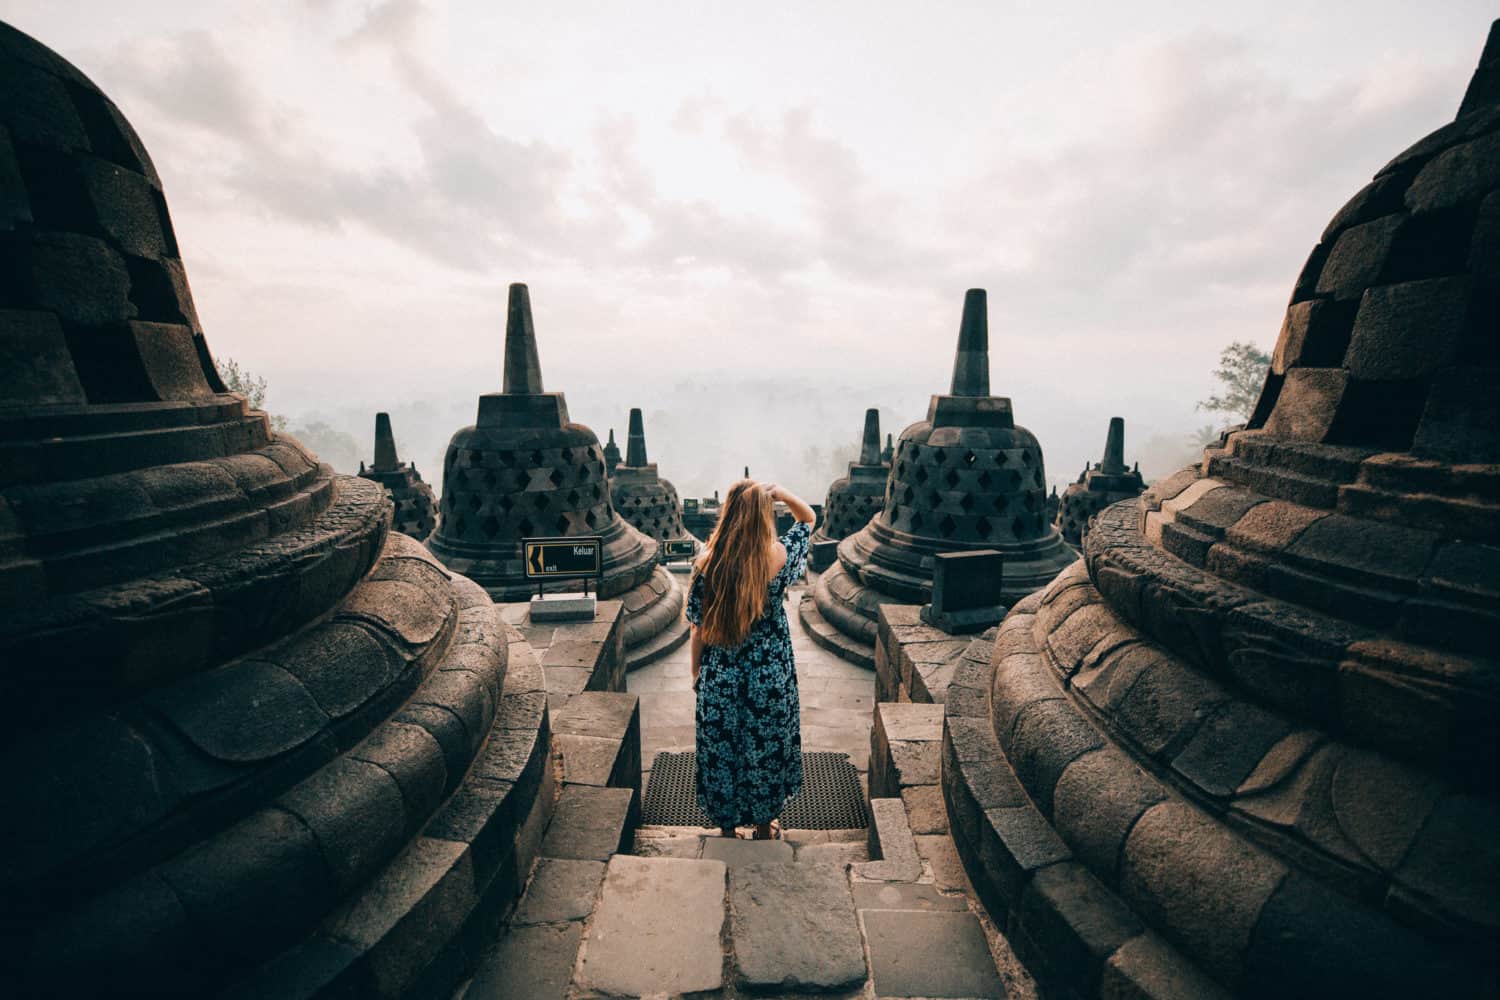 Emily at Borobudur Temple in Yogyakarta